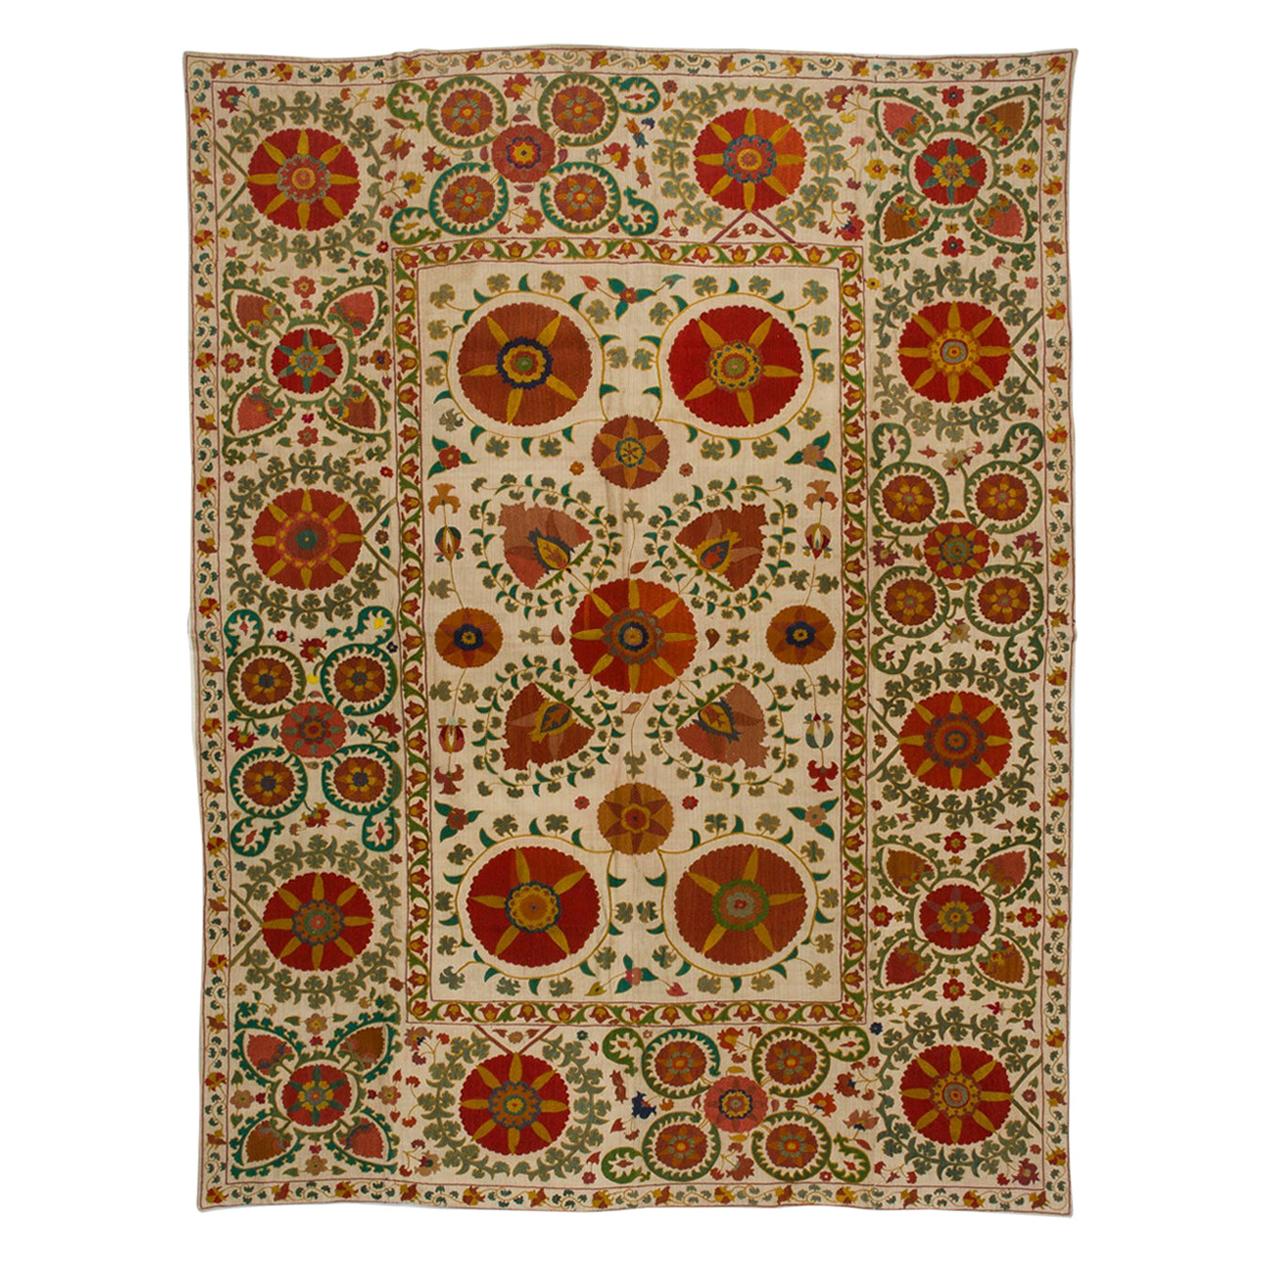 Susani Uzbek Embroidery Tapestry